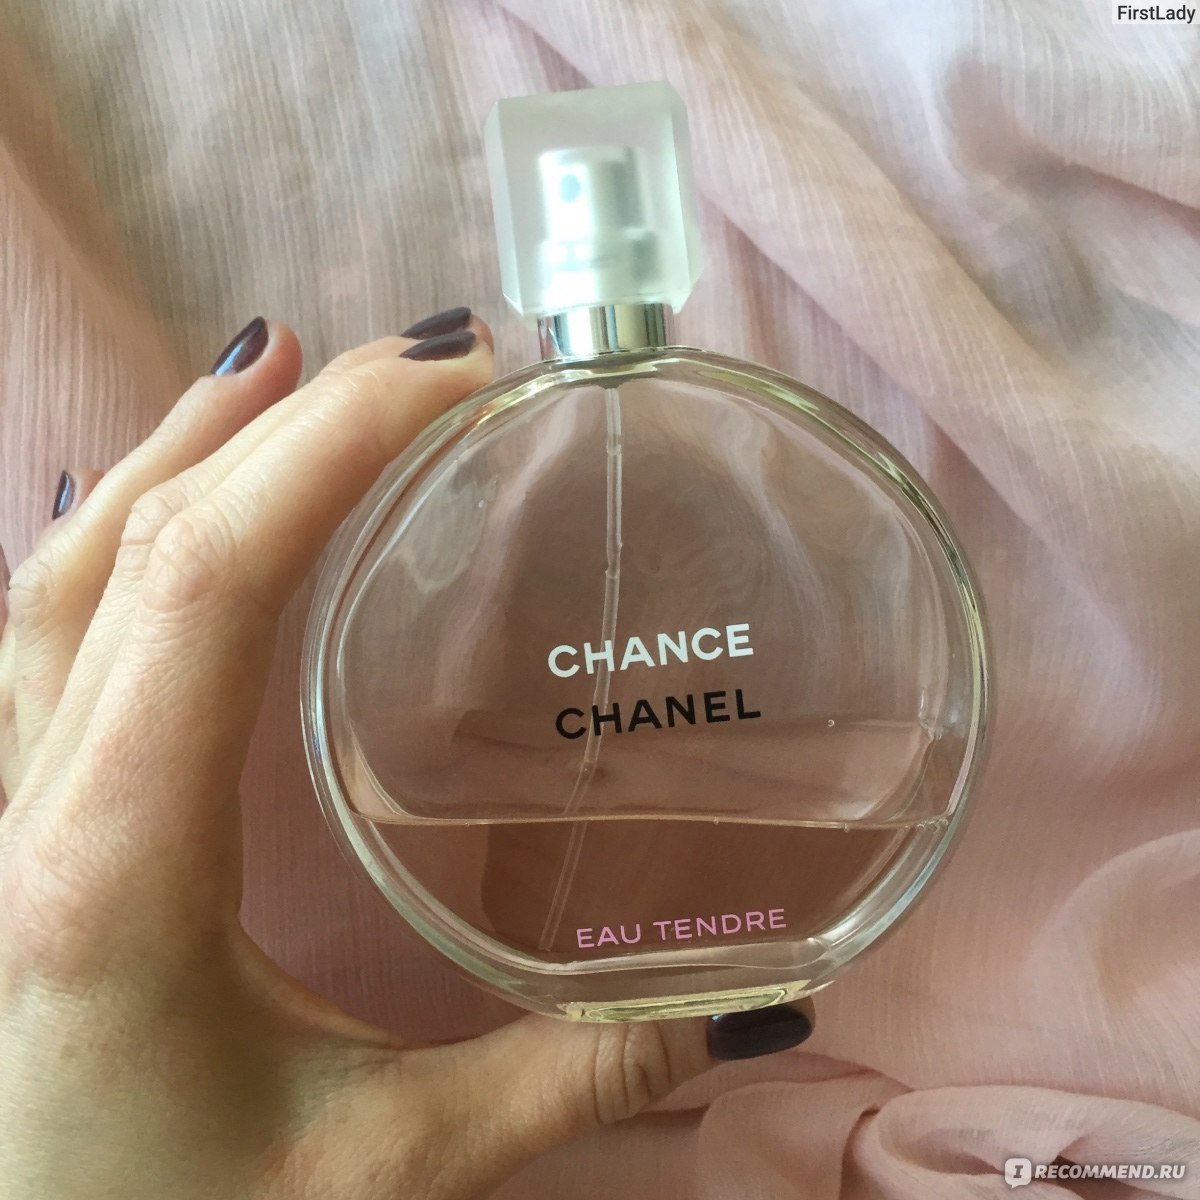 Туалетная вода перевод. Chance Chanel Eau tendre 65 ml. Шанель шанс пудровый аромат. Шанель шанс тендер пудровые. Chanel chance Eau Fraiche 30 мл.